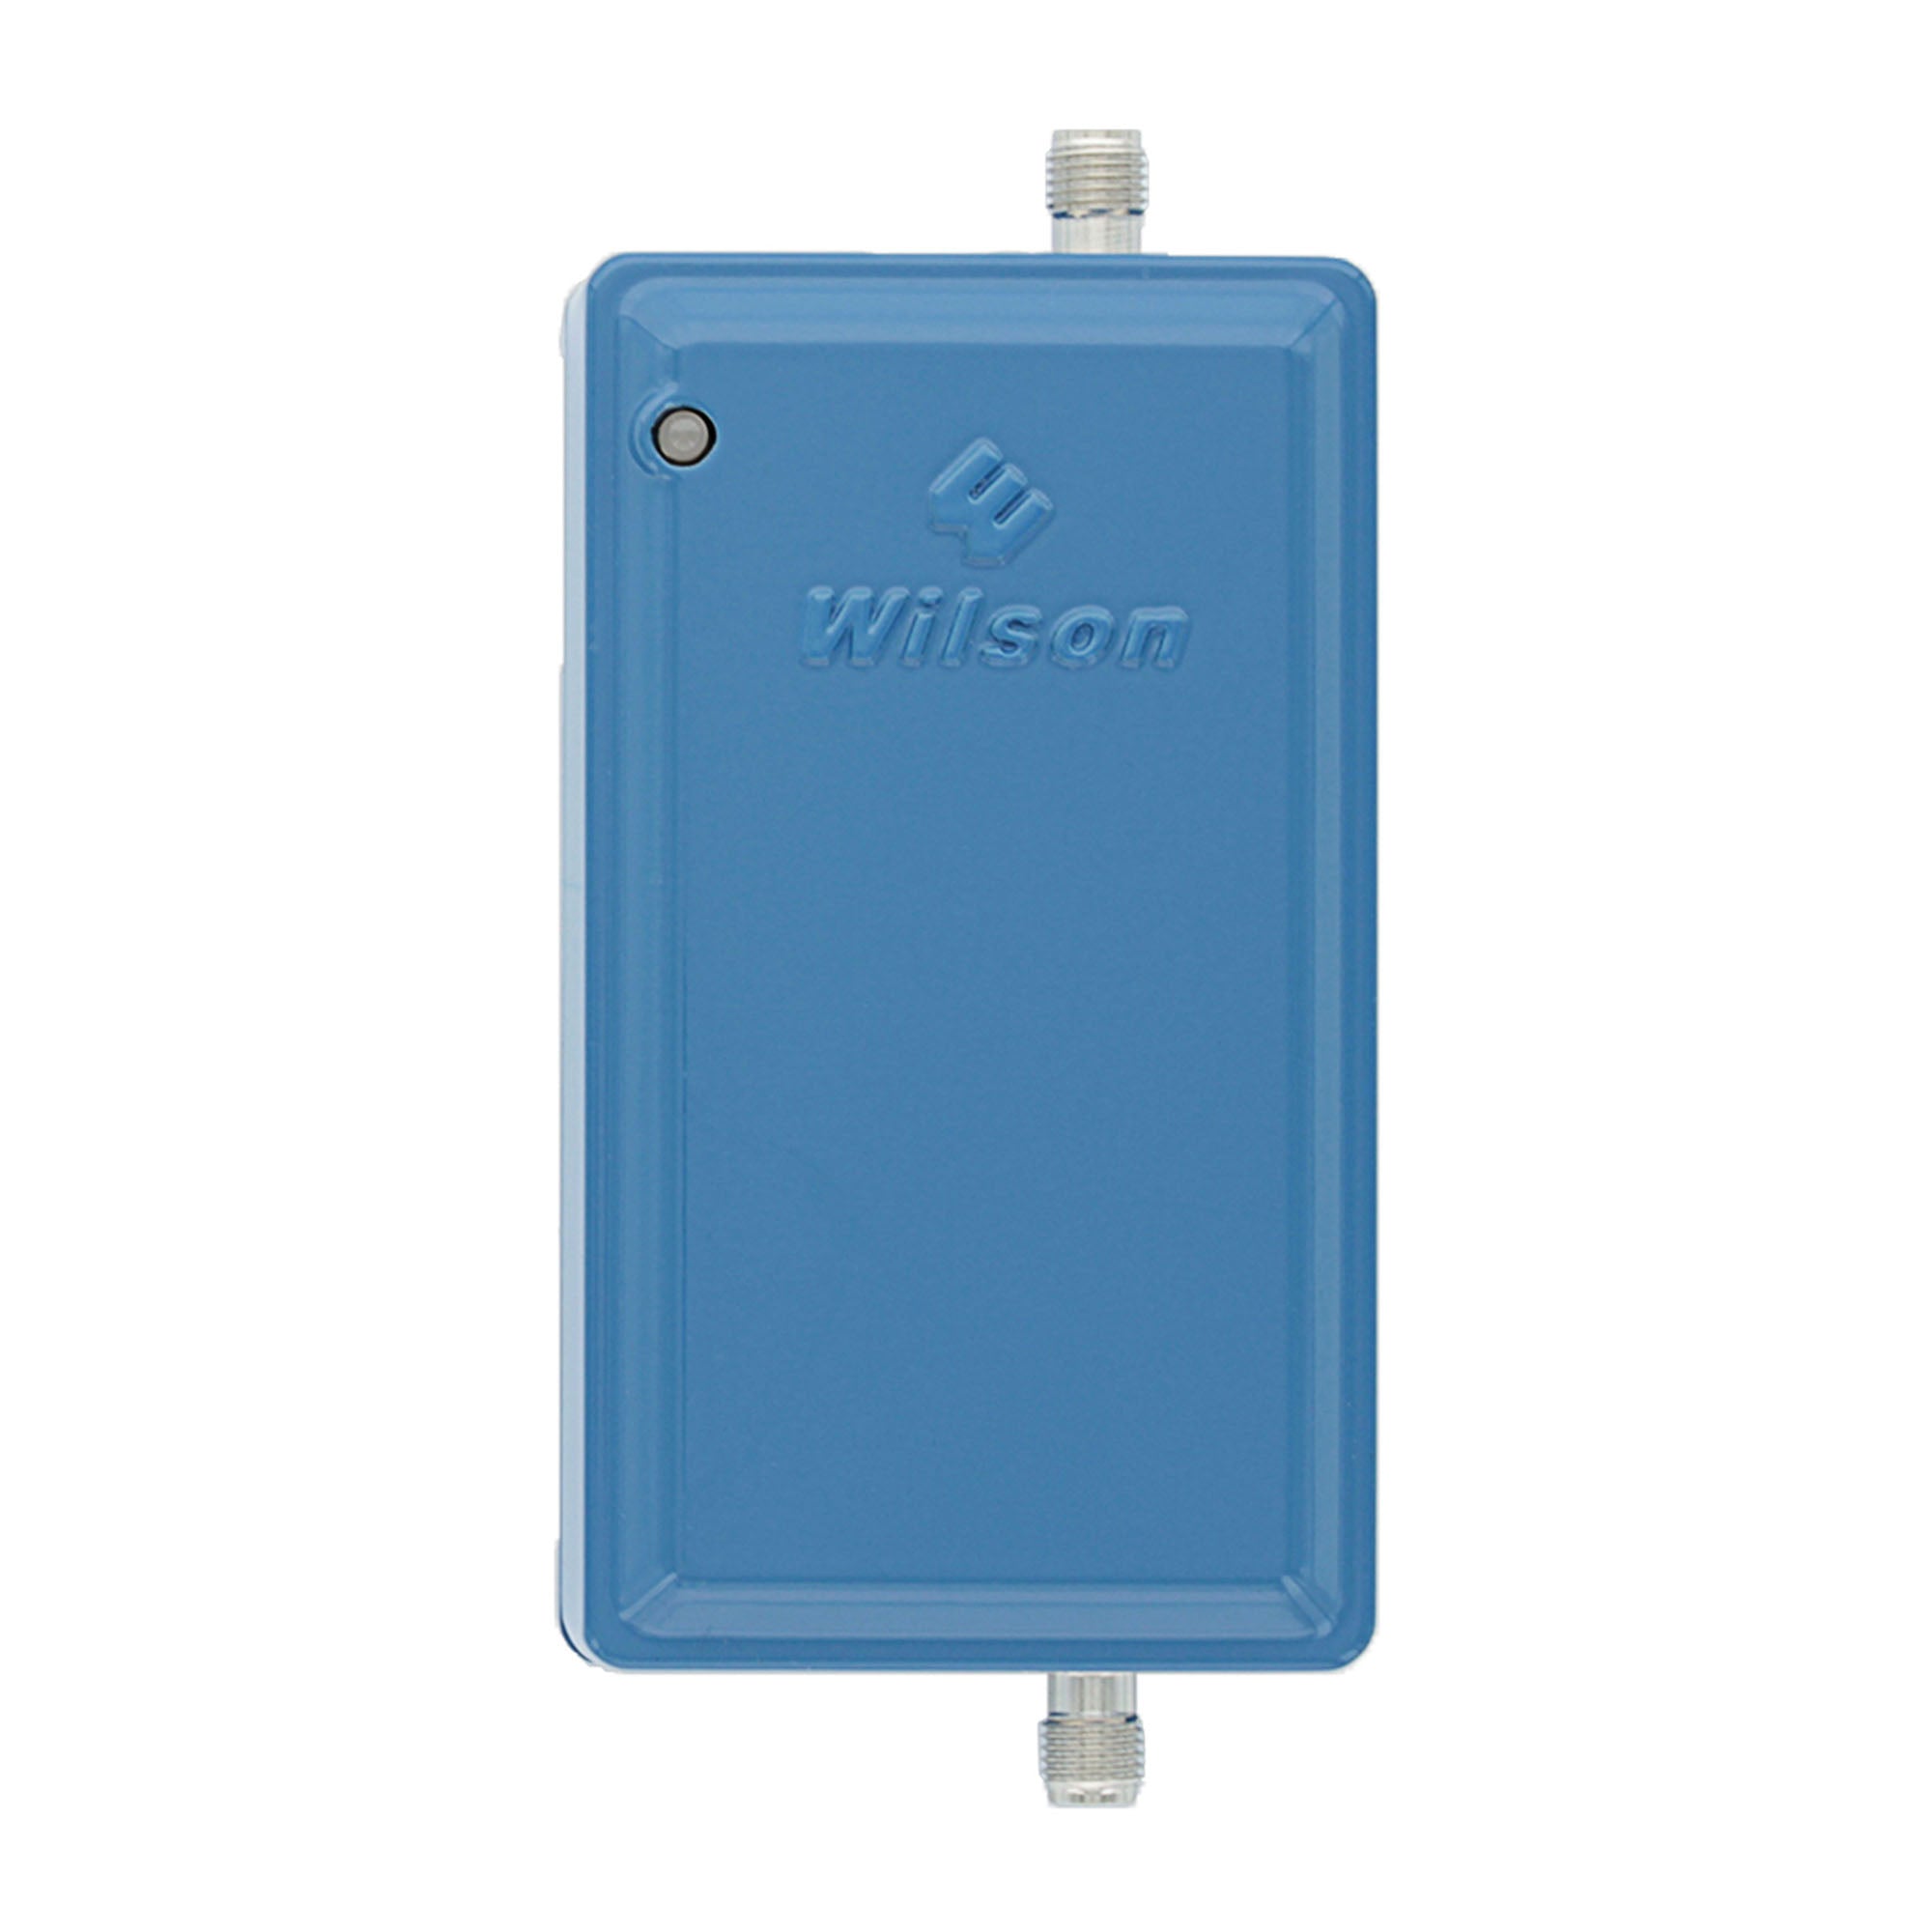 WilsonPro IoT 2-Band M2M w/ Mini Mag Mount Kit